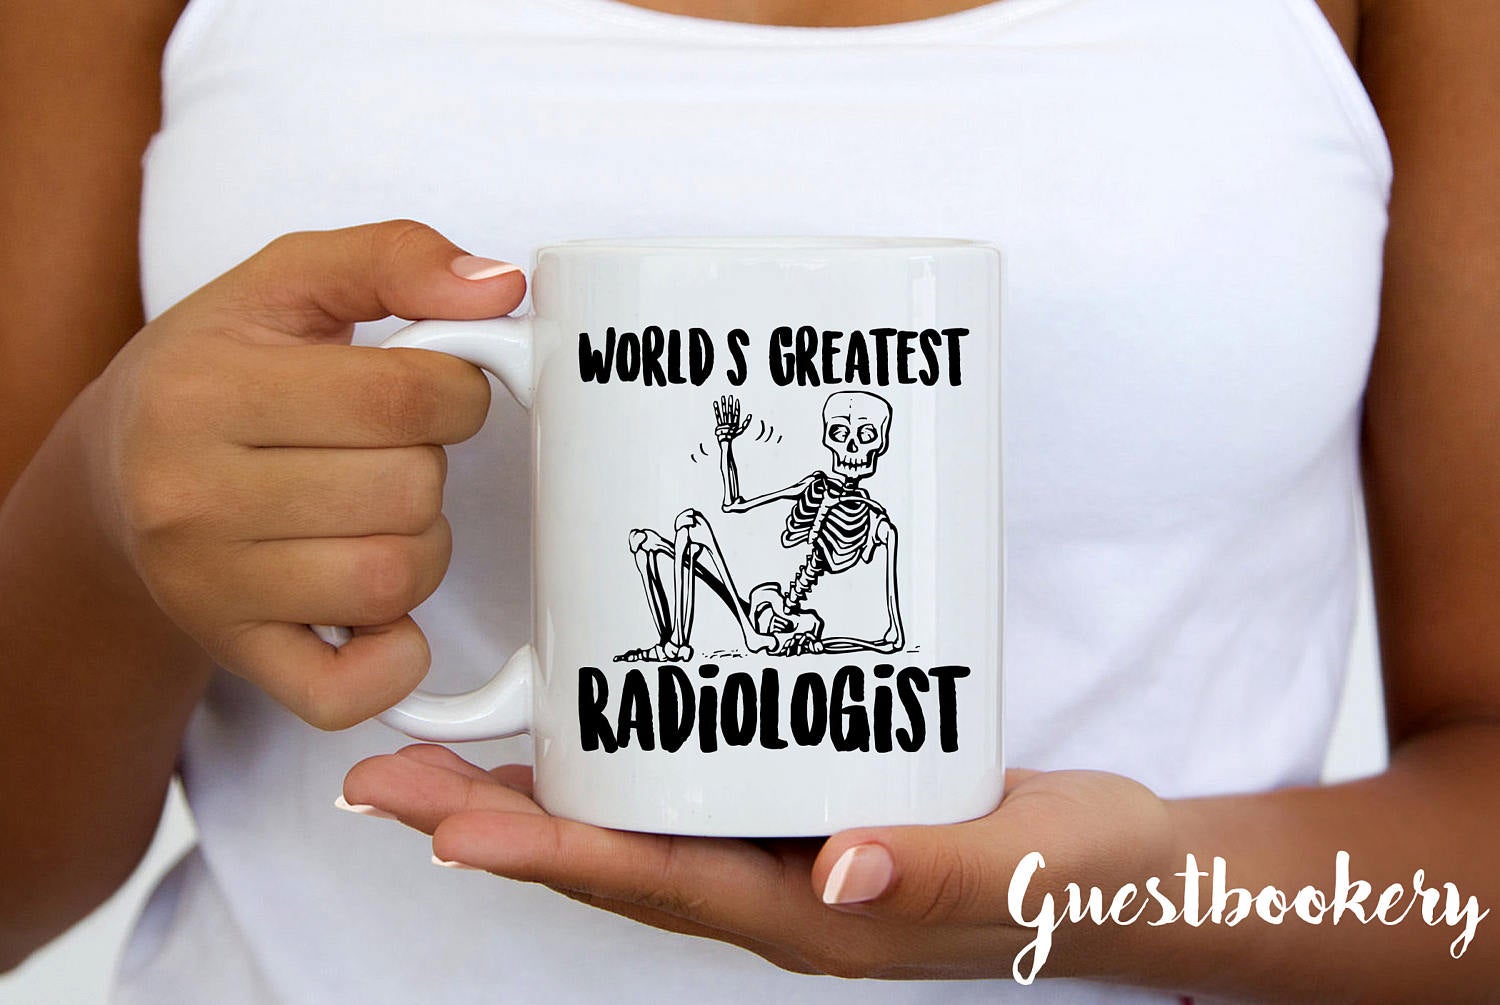 Worlds Greatest Radiologist Mug